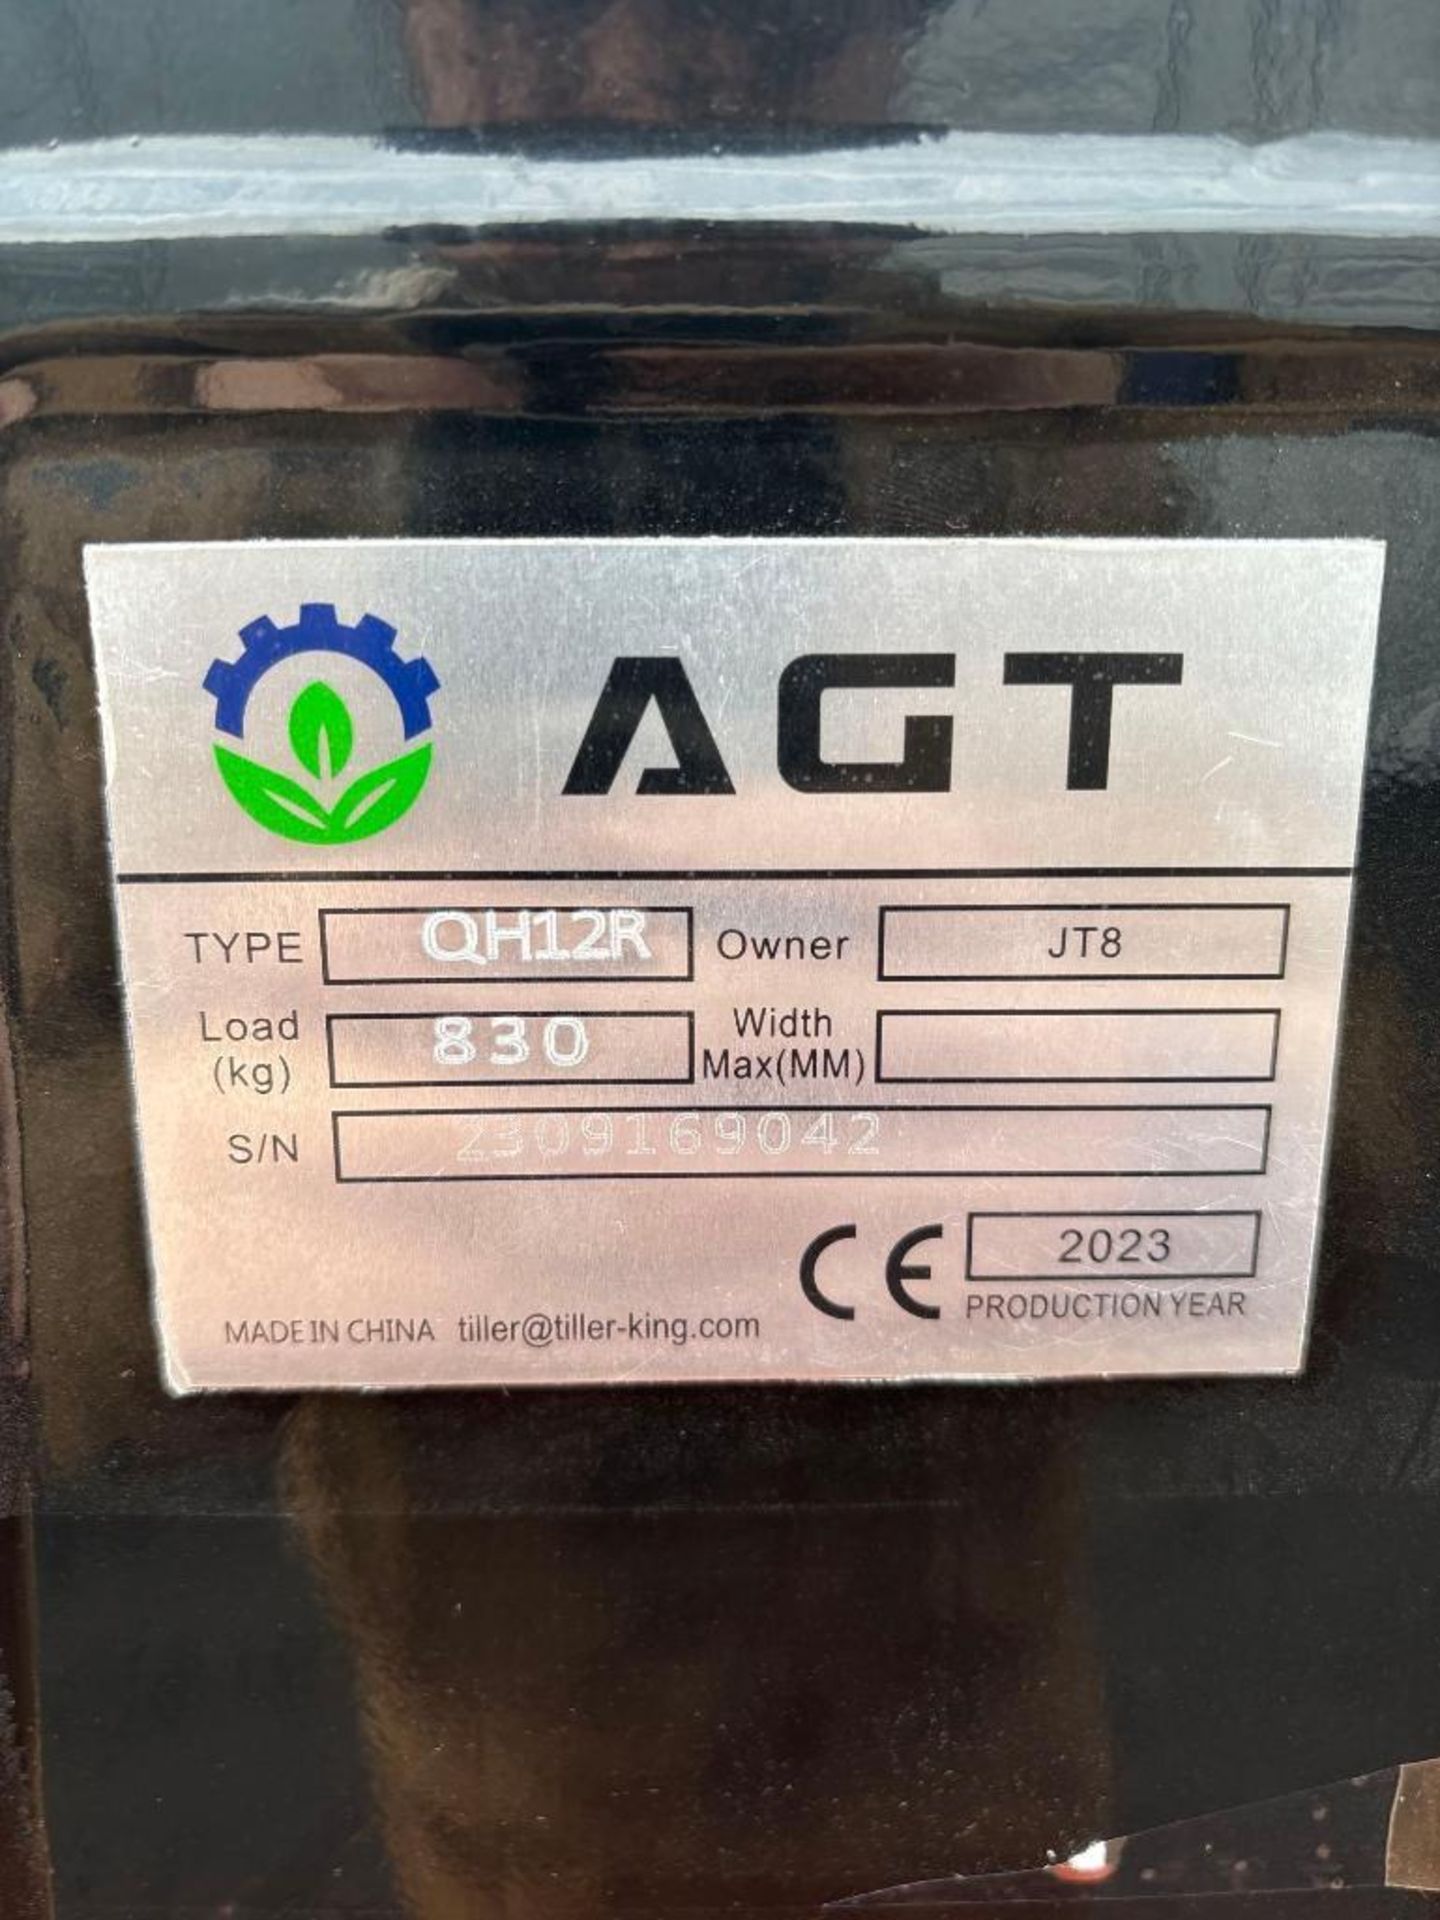 New AGT QH12R Mini Gas Excavator - Image 7 of 8